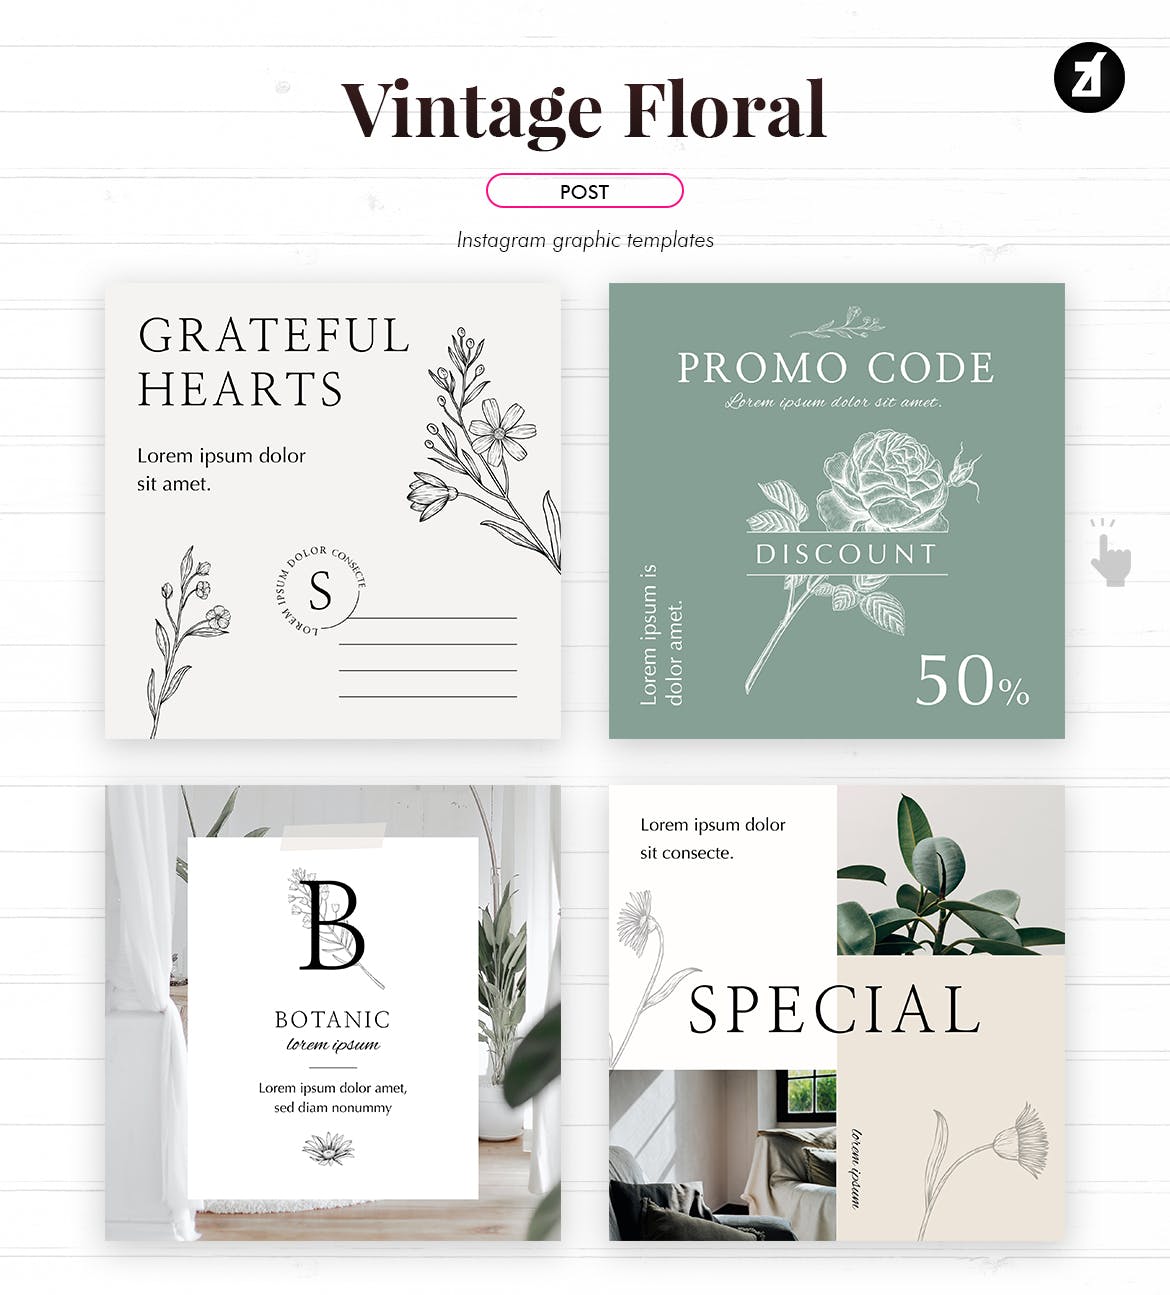 复古花卉社交媒体图形模板定制素材包 Vintage floral social media graphic templates设计素材模板